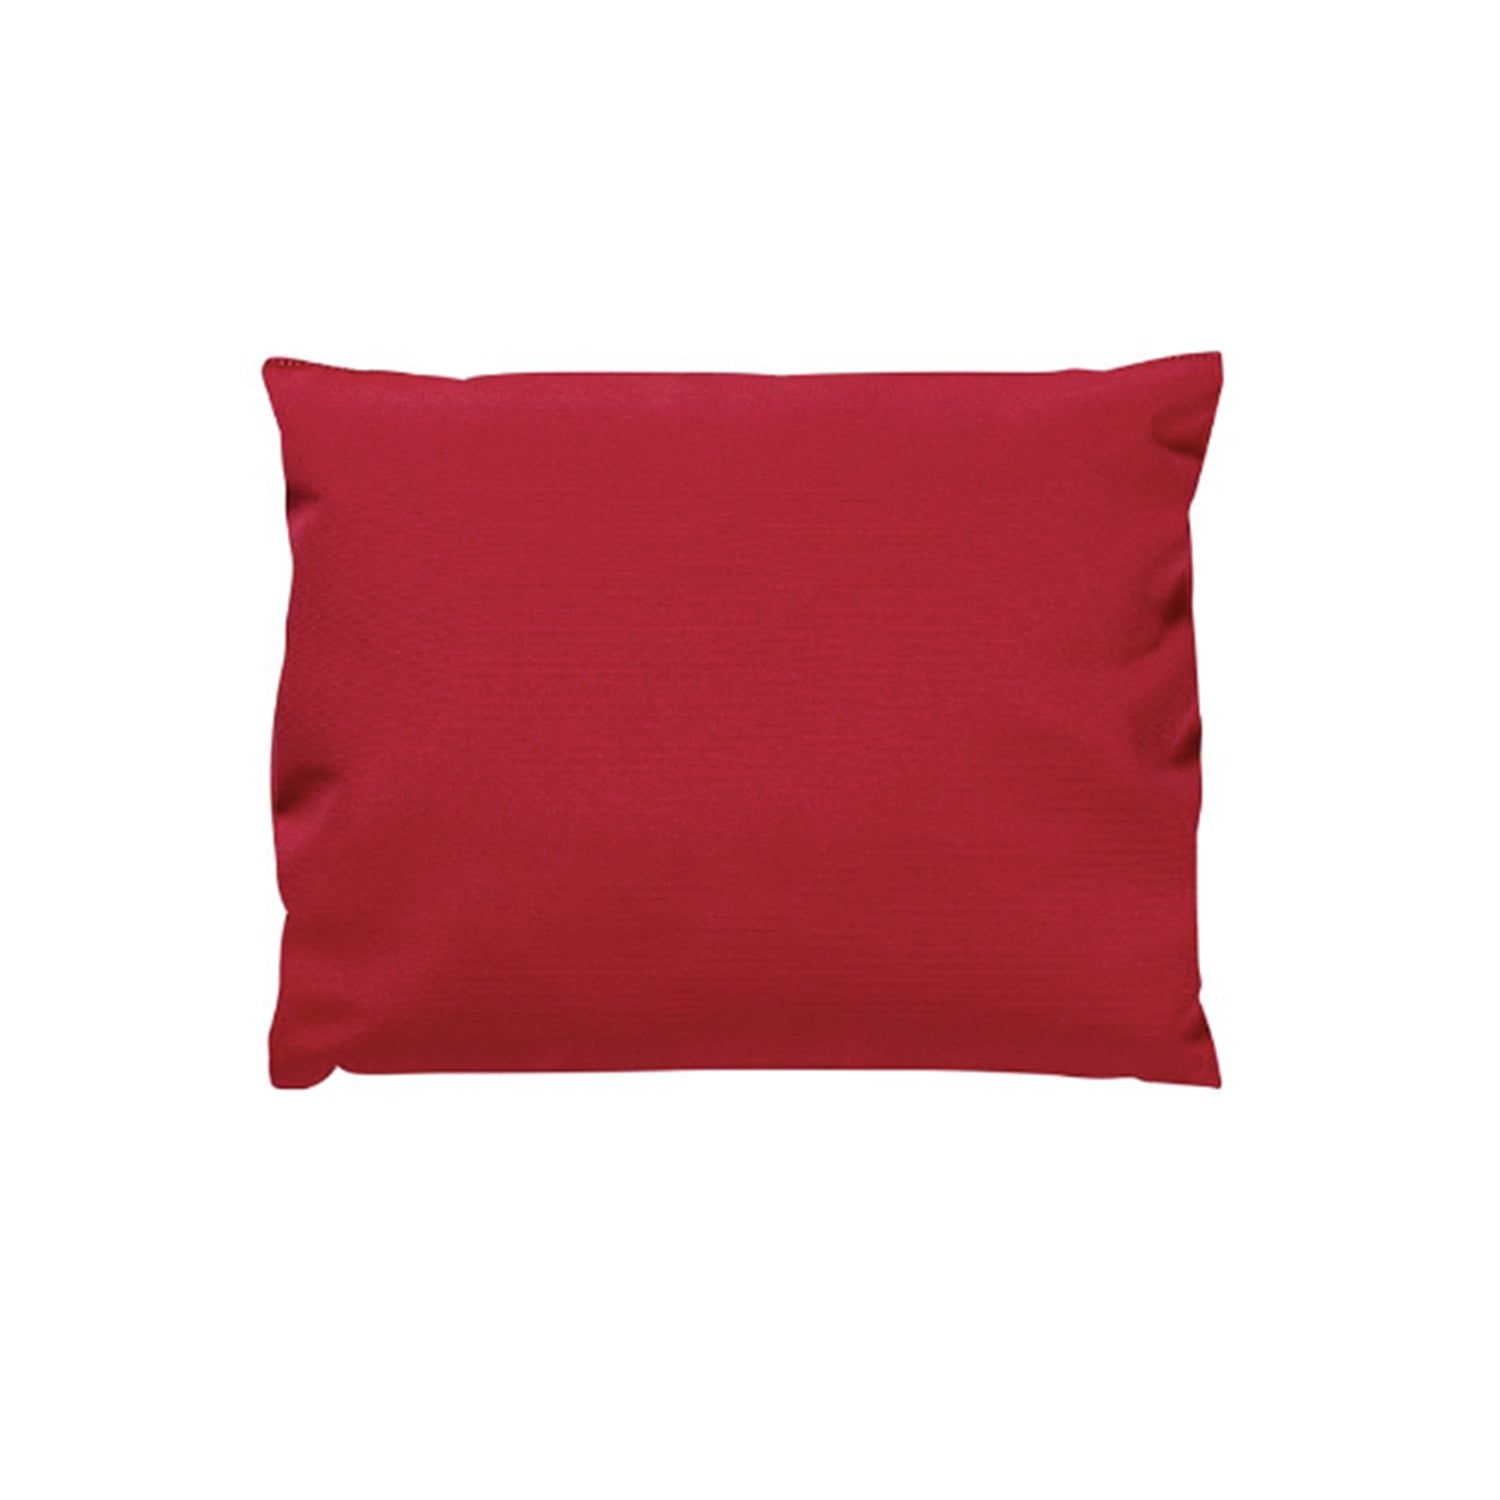 C.R.P. Adirondack Headrest Cushion in colour jocky red